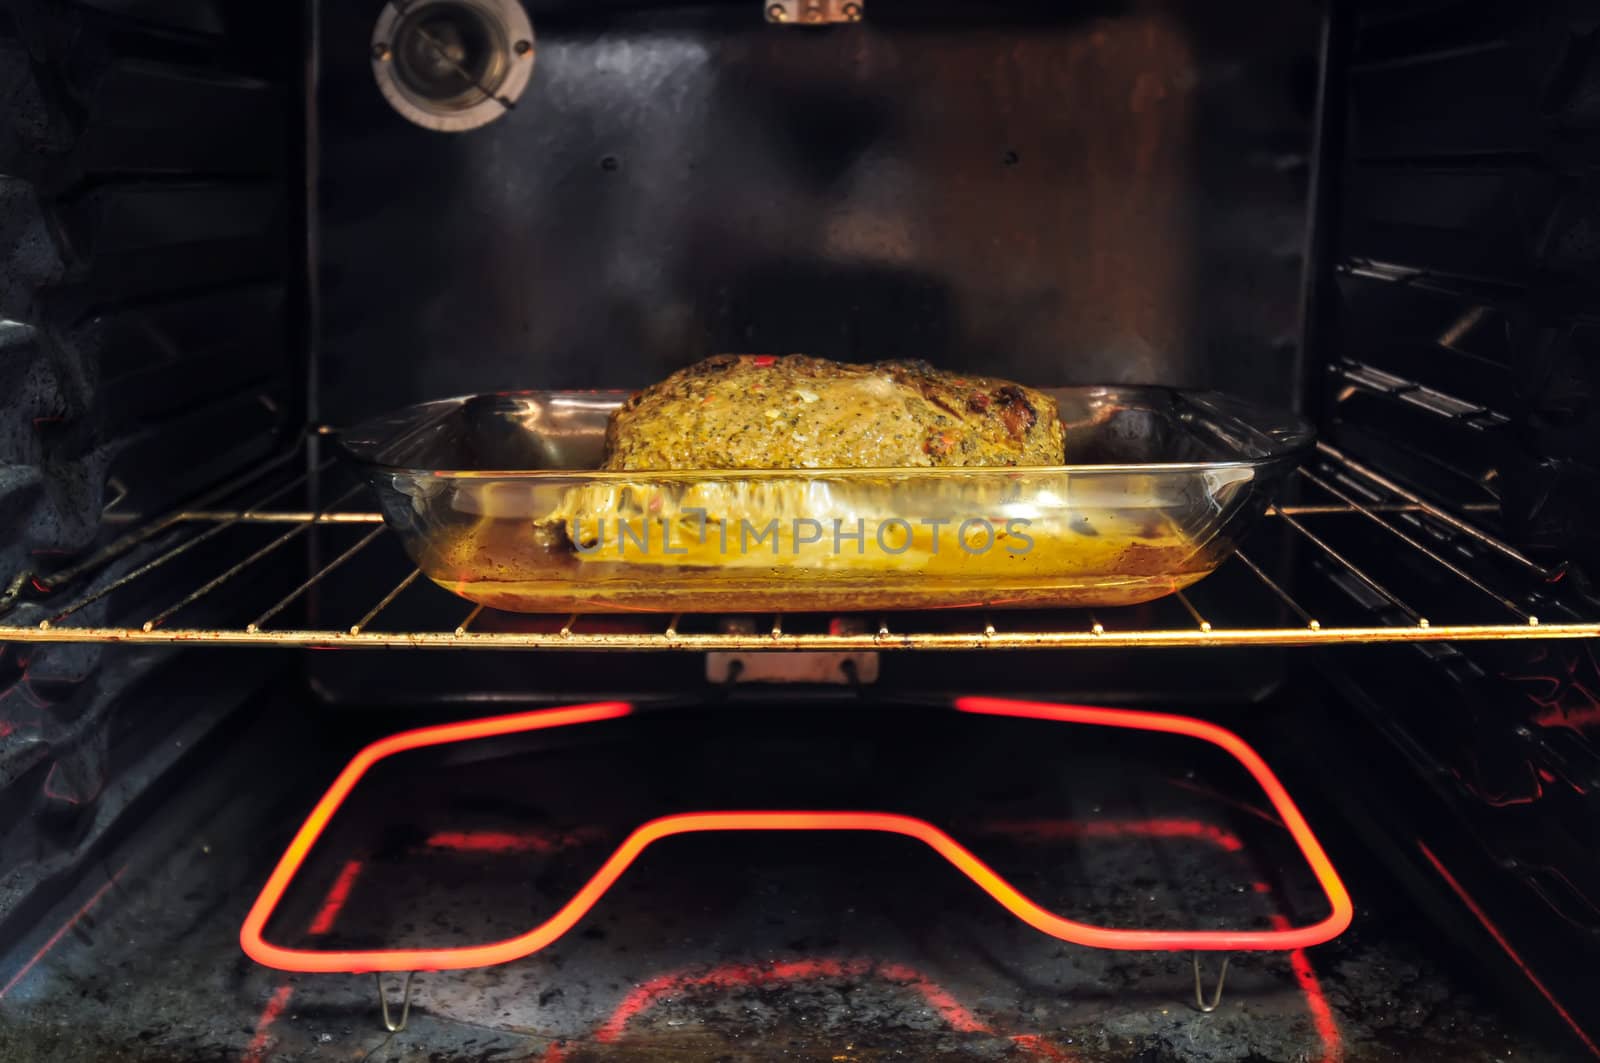 pork tenderloin in oven baking by digidreamgrafix